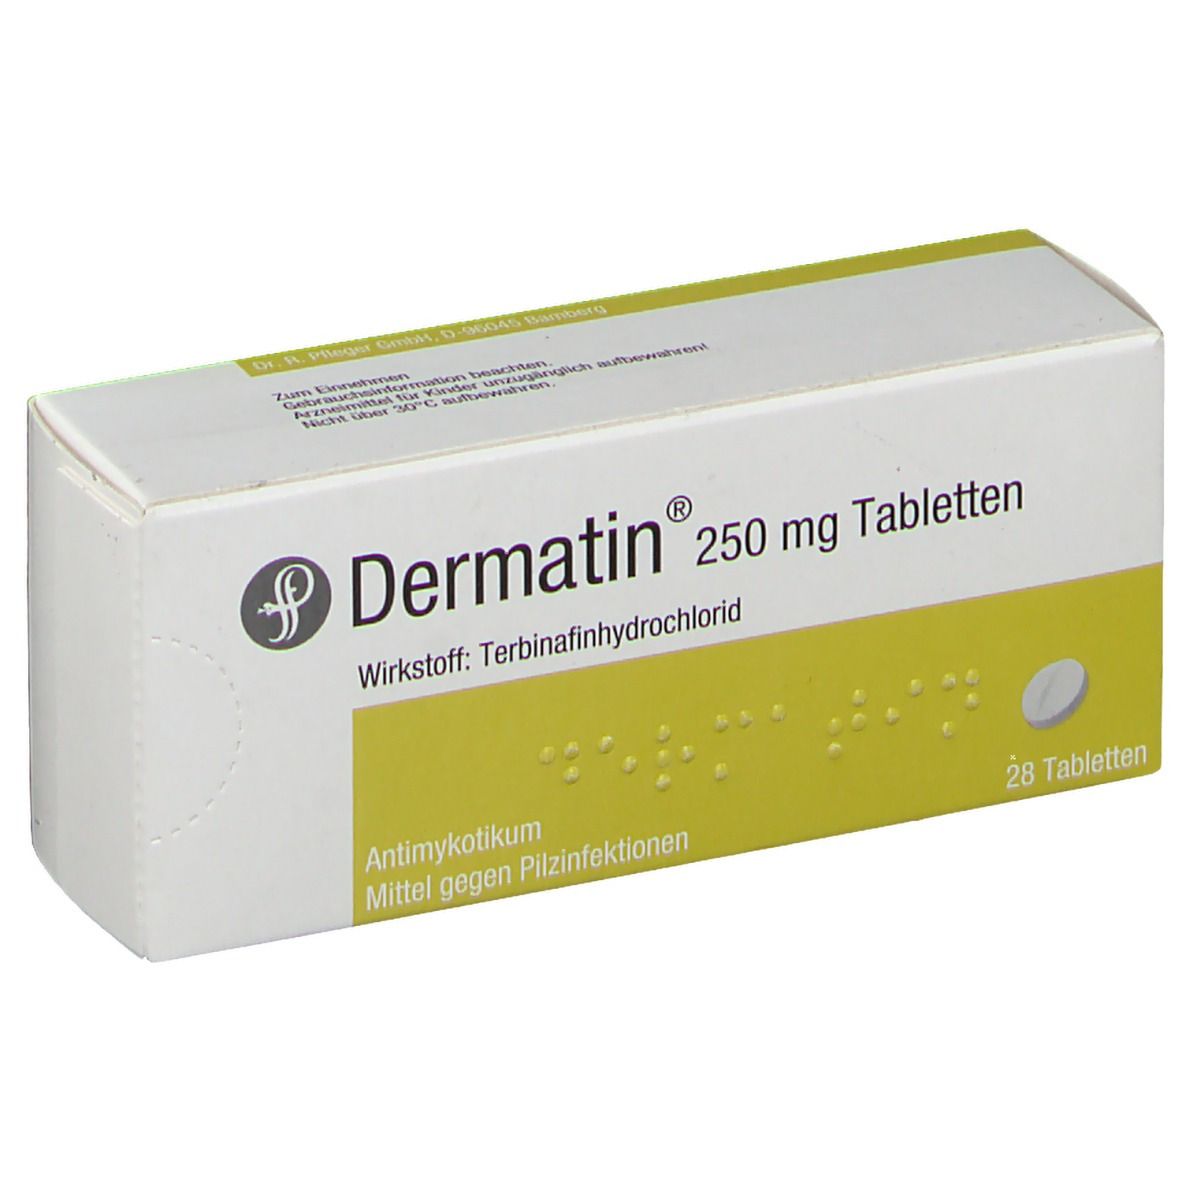 Dermatin® 250 mg